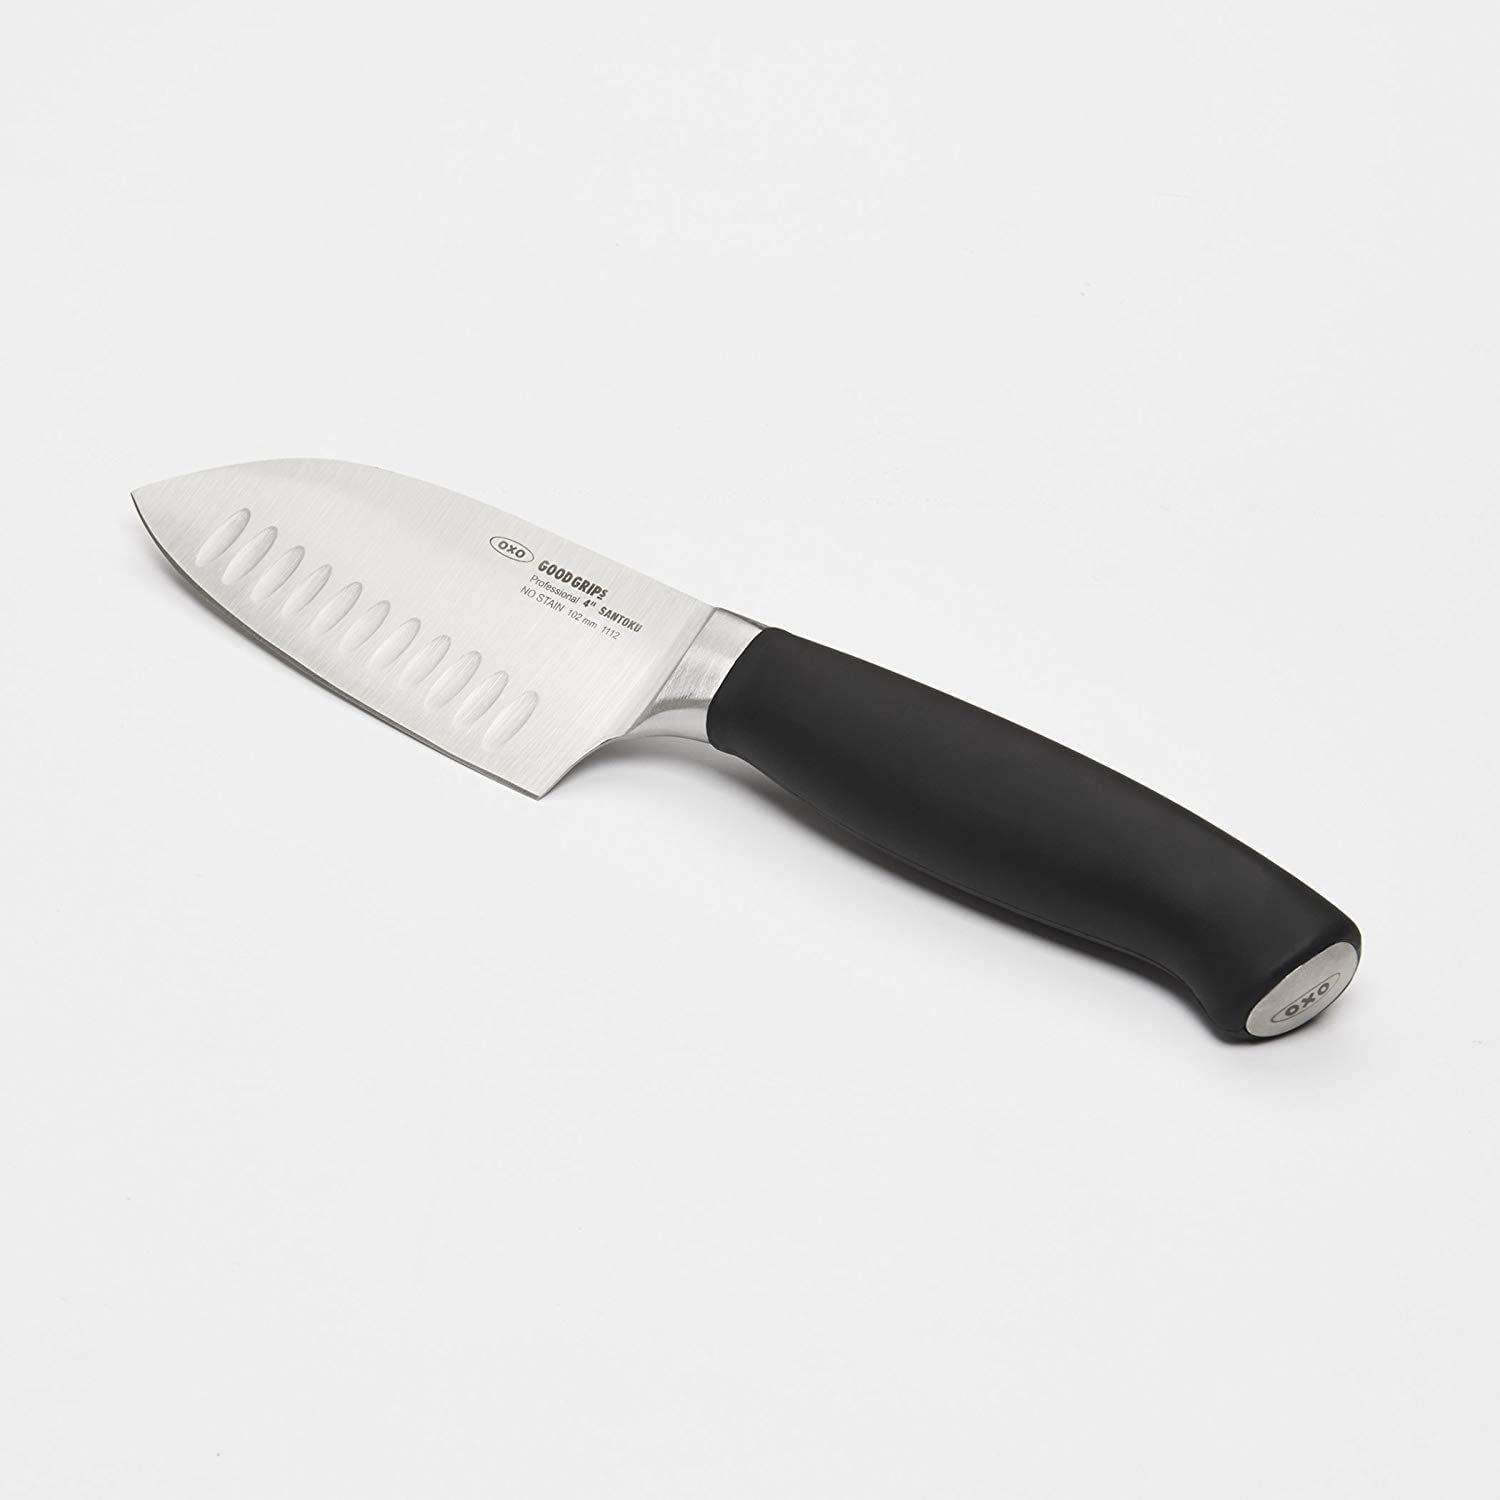 OXO Outdoor Santoku Knife with Locking Sheath